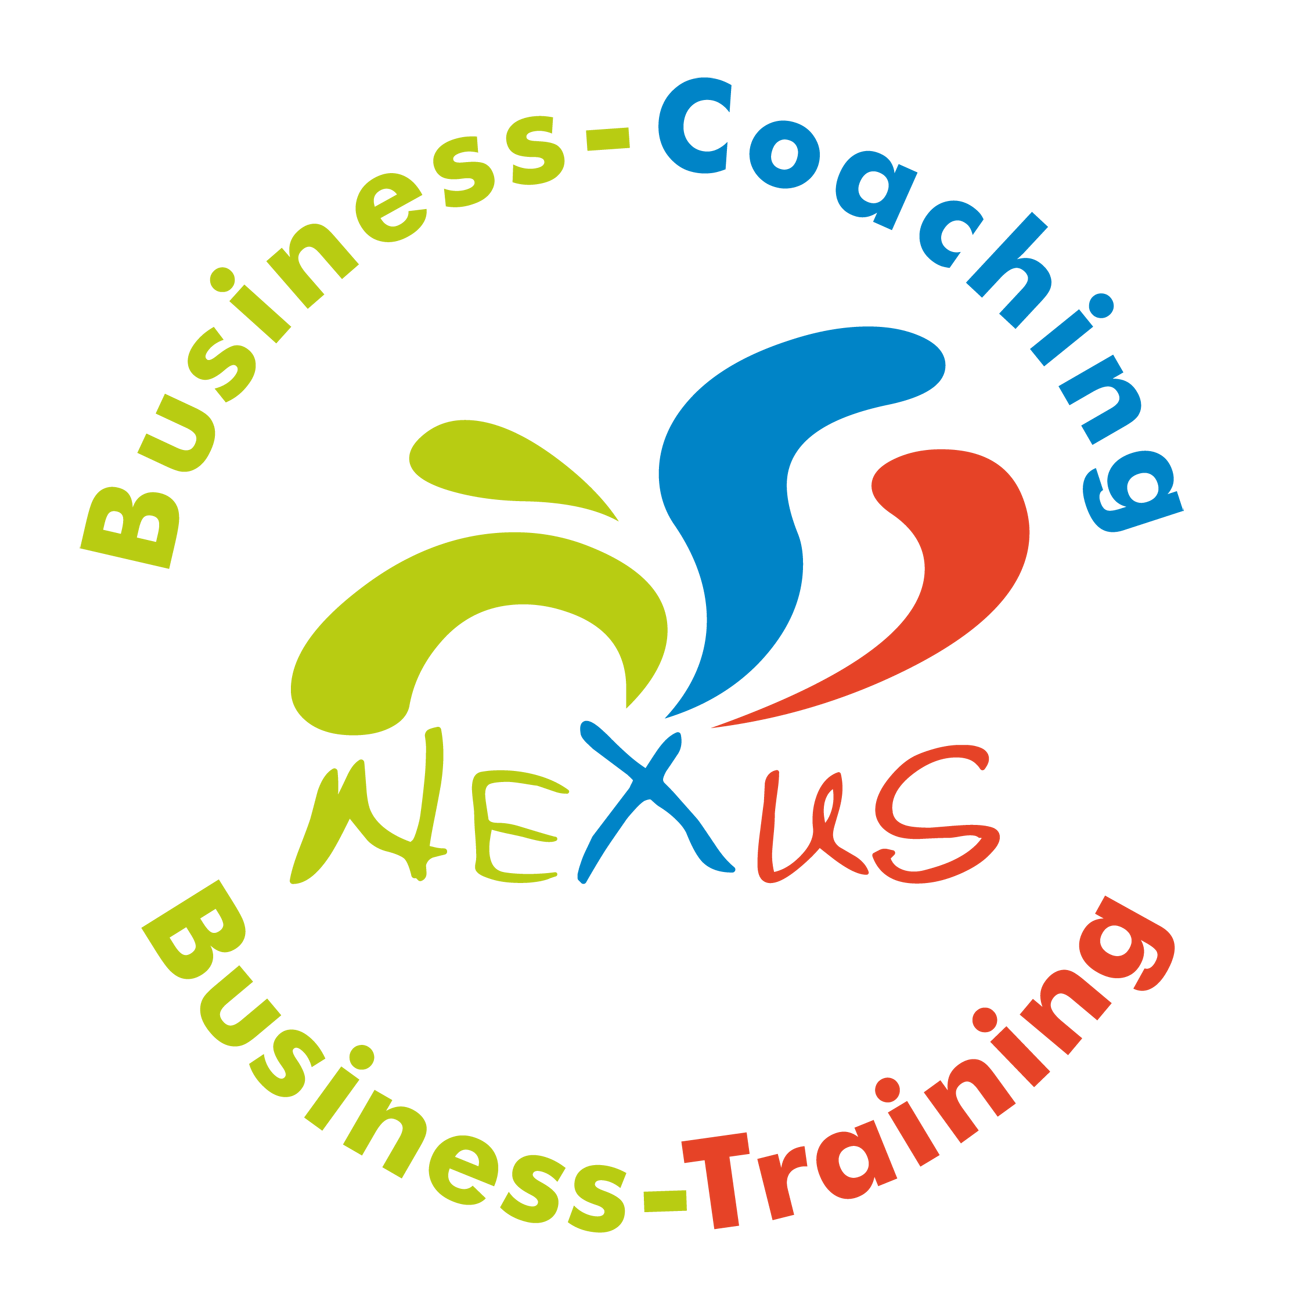 Business-Coaching Fuerth Franken, Führungskräfte-Coaching, Führungskräftetraining, Persönlichkeitstraining